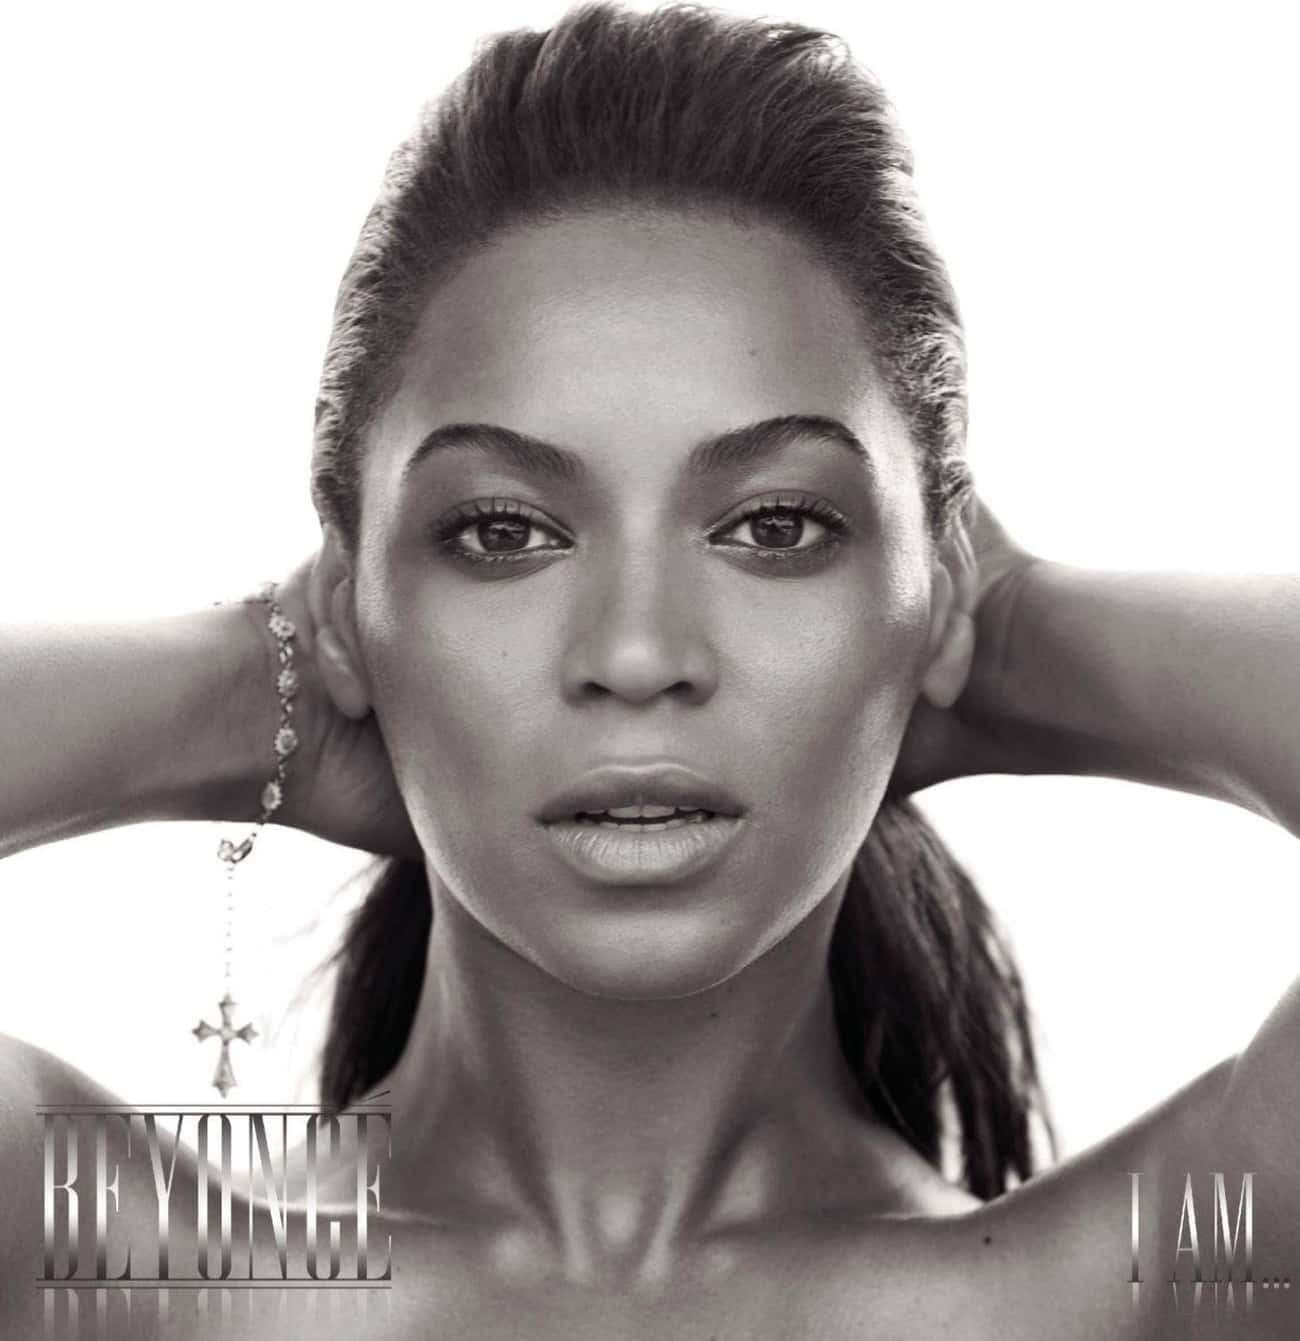 Beyoncé - 'I Am ... Sasha Fierce'